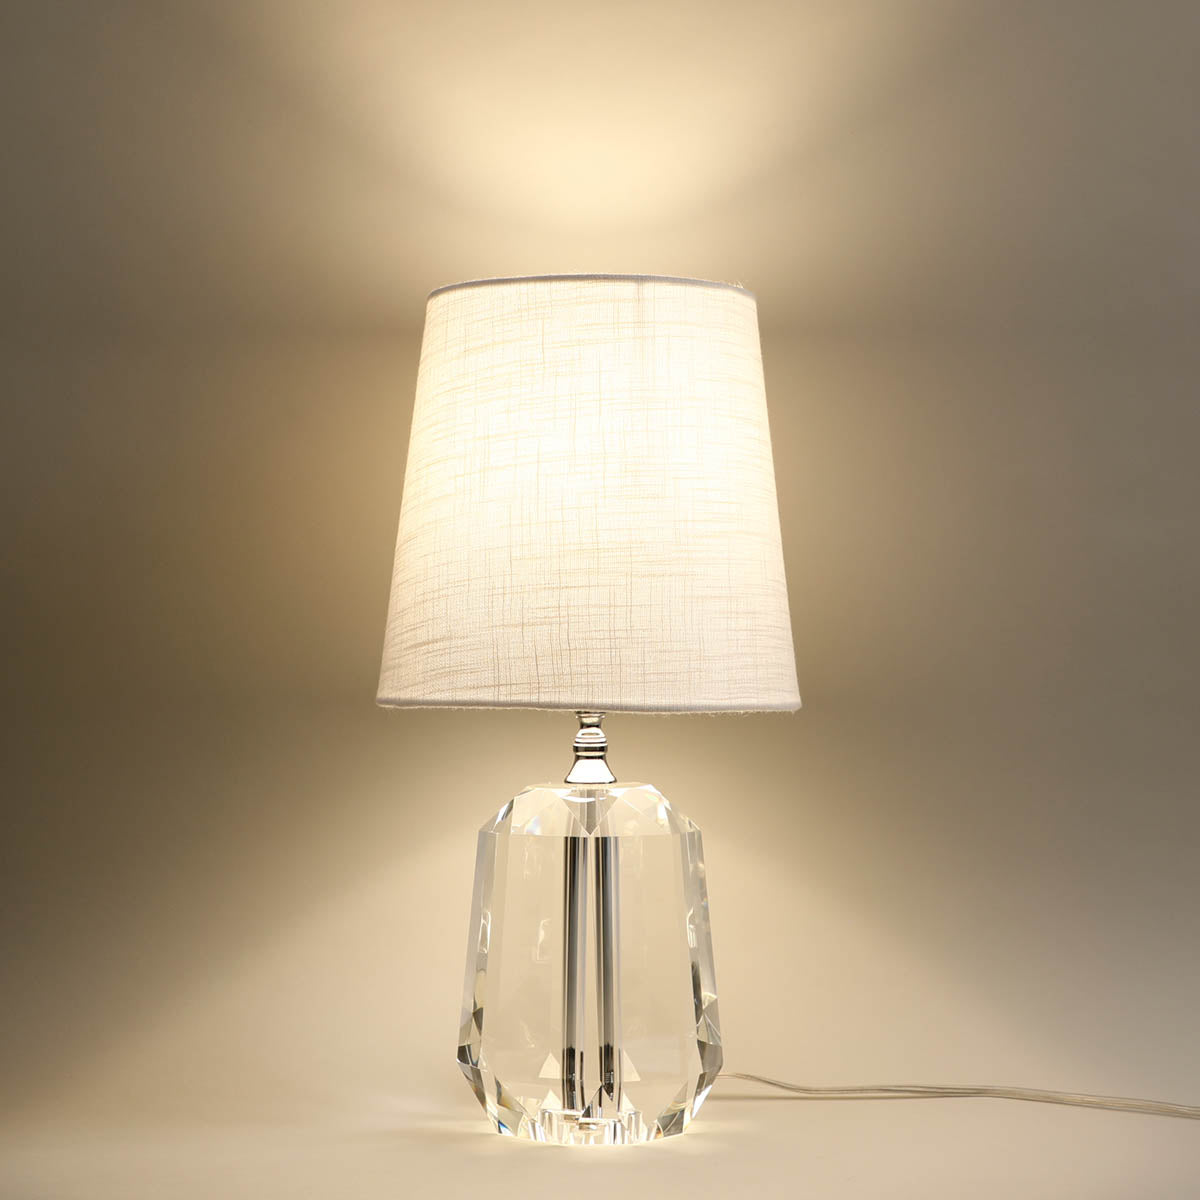 Brera Table Lamp with Shade